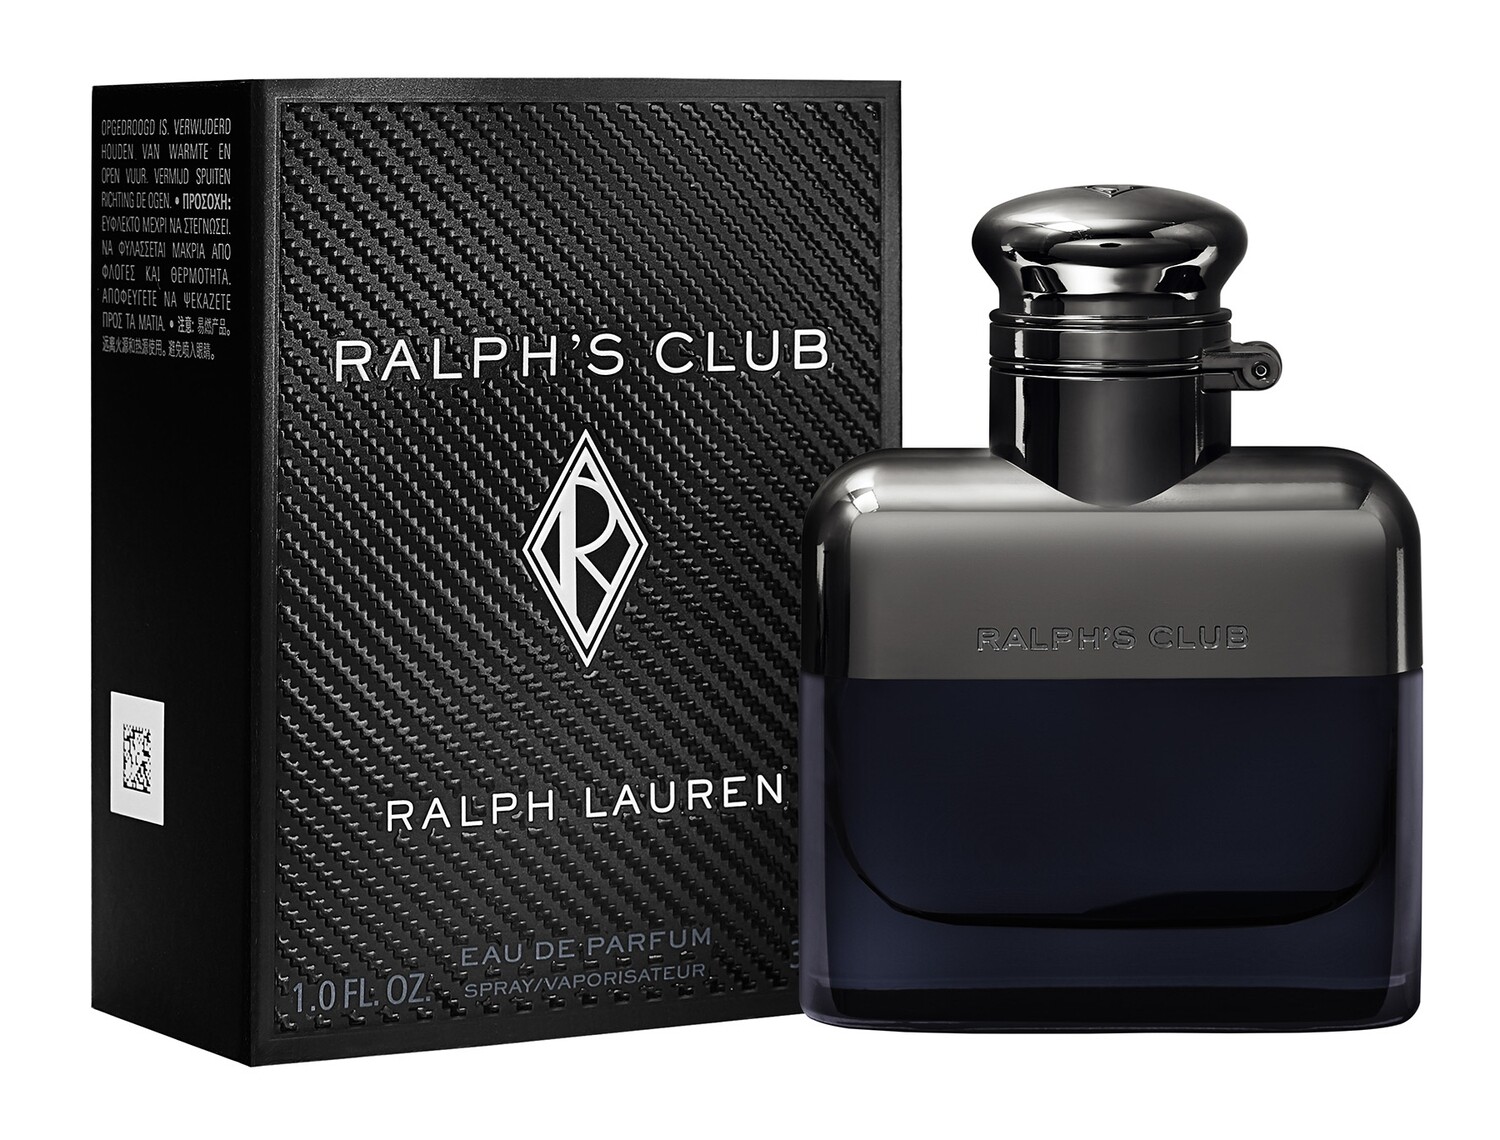 Ralph's Club- Ralph Laurent